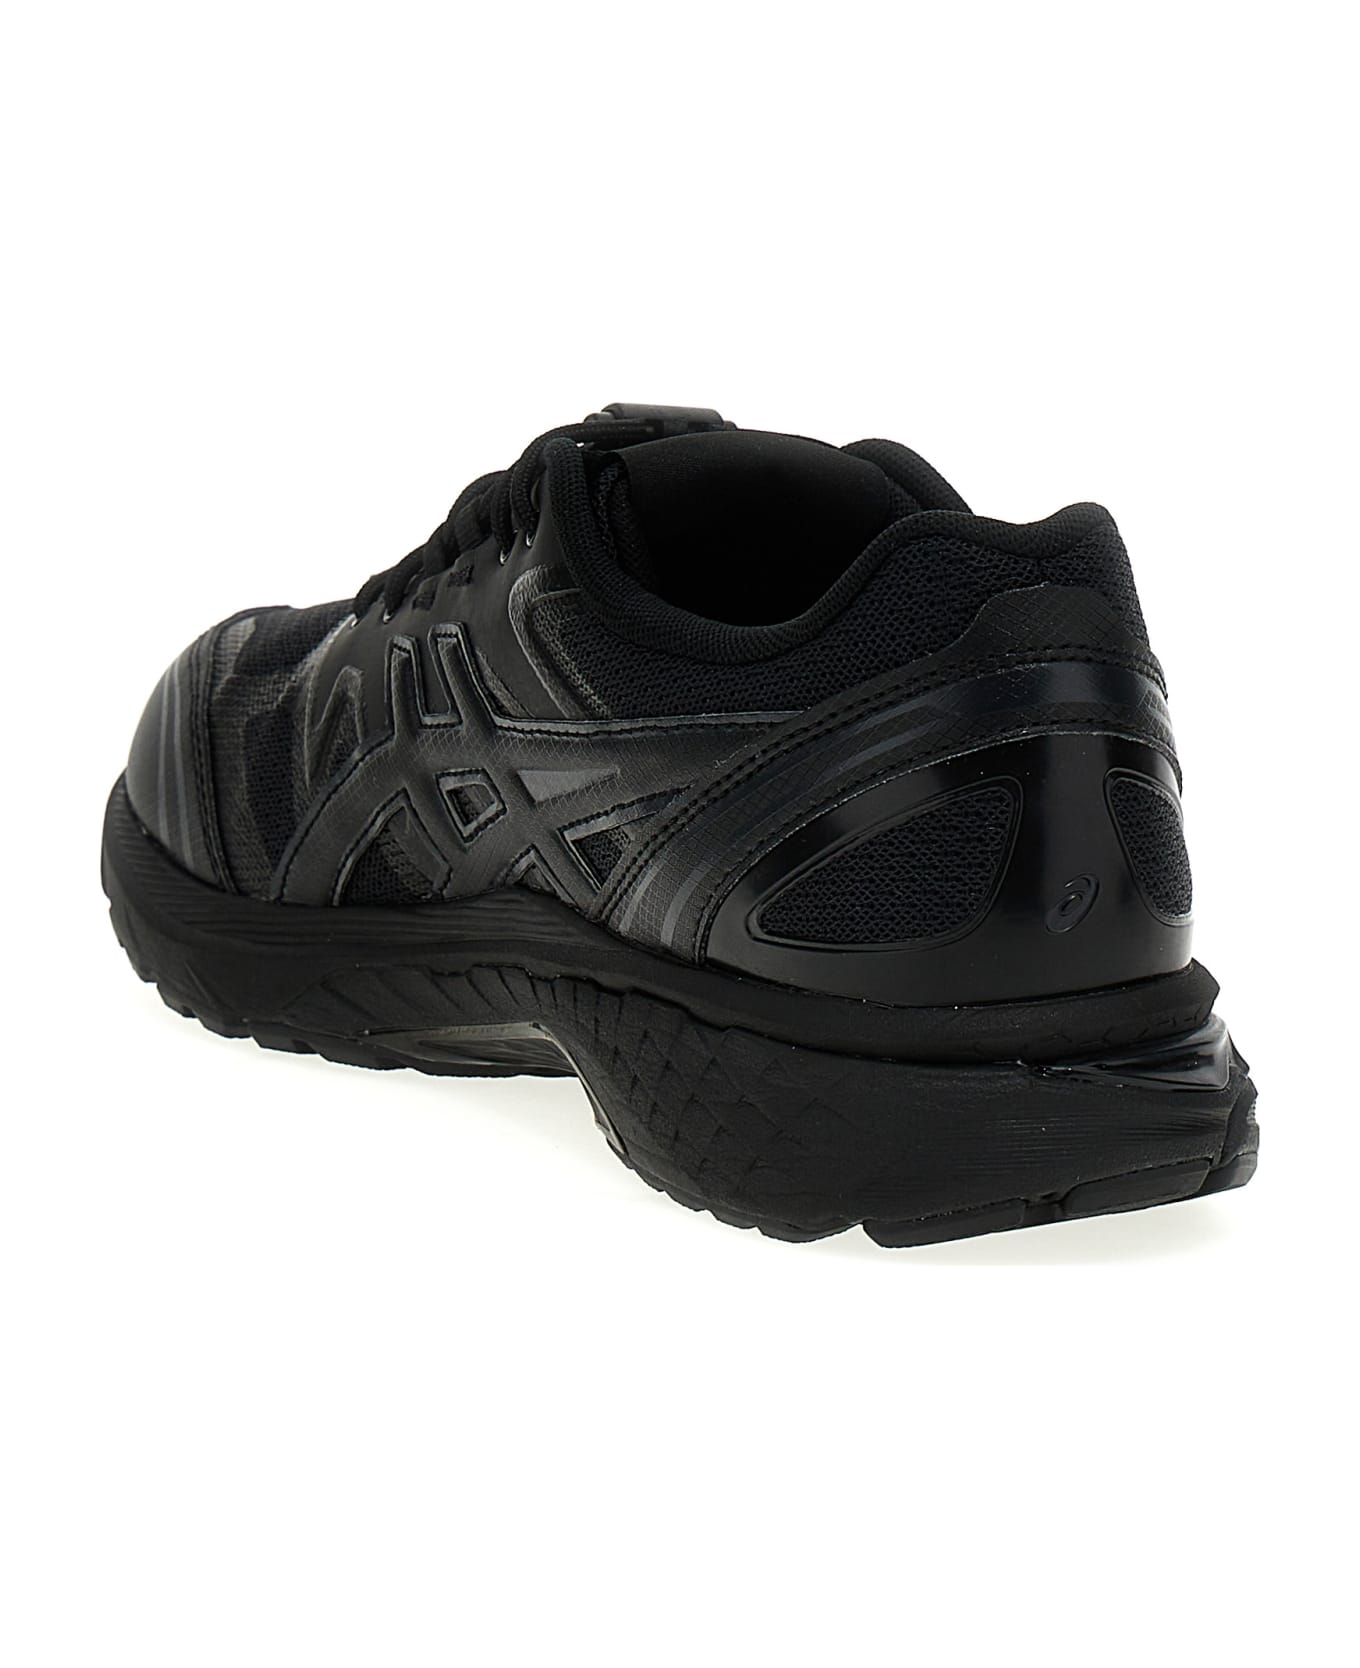 Comme des Garçons Shirt 'gel-terrain' Sneakers - Black  